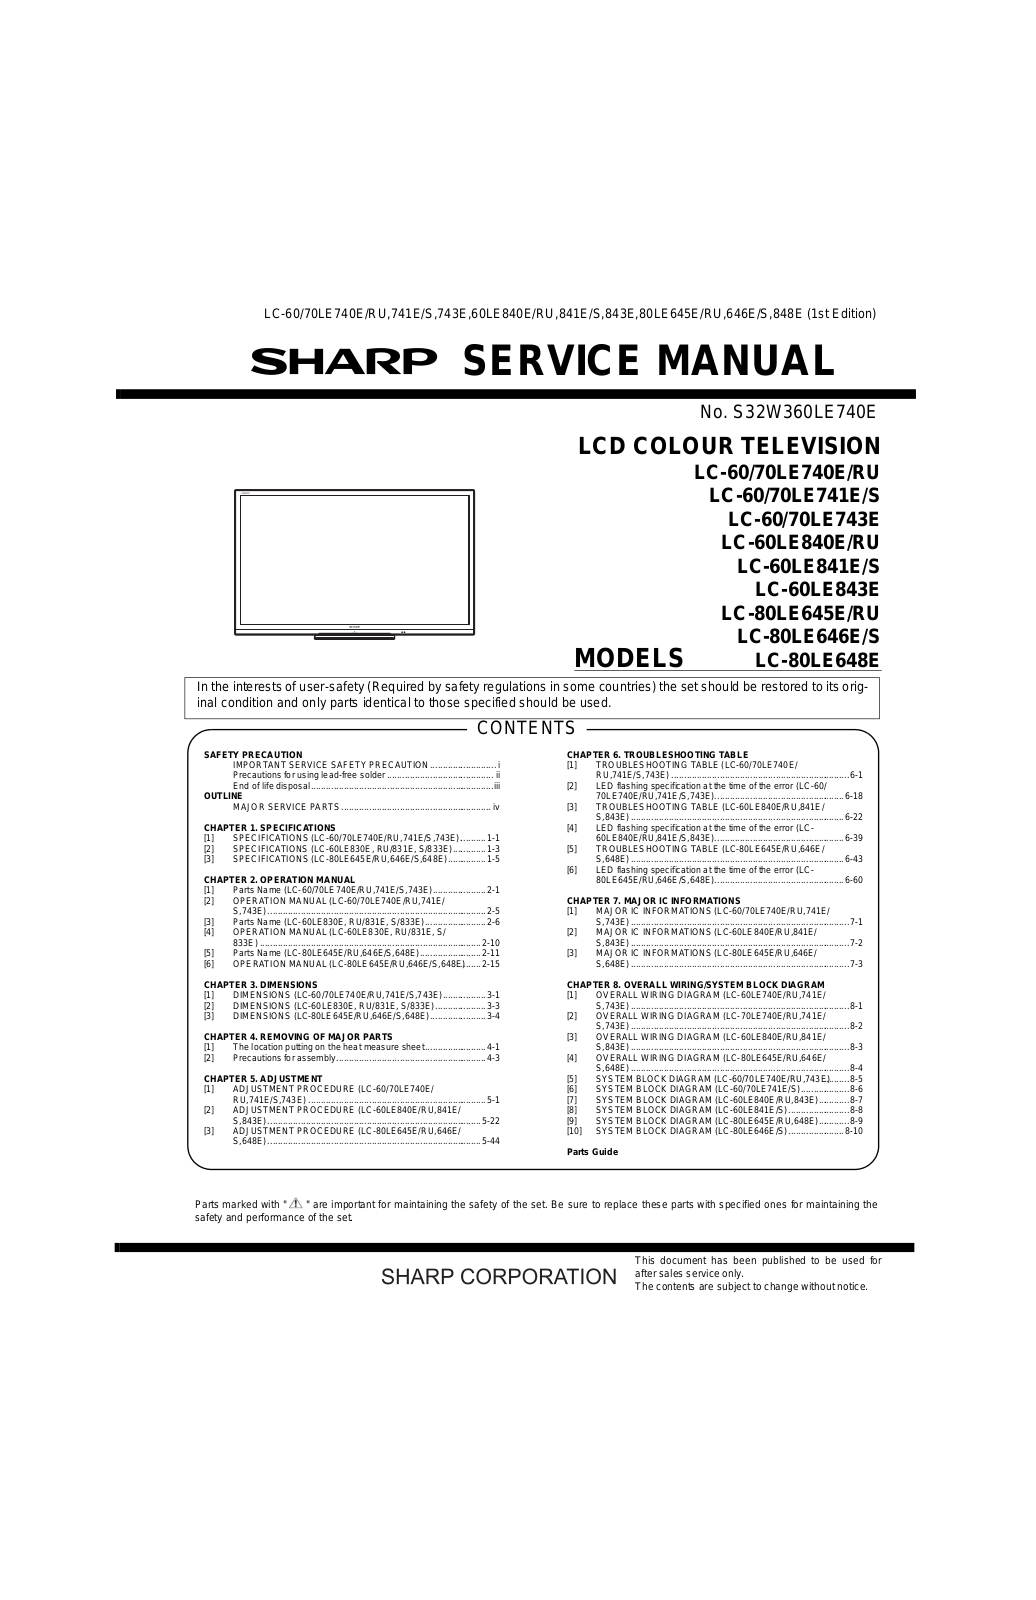 SHARP LC-70LE740RU, LC-70LE740E, LC-60LE740RU, LC-60LE740E, LC-70LE741S Service Manual